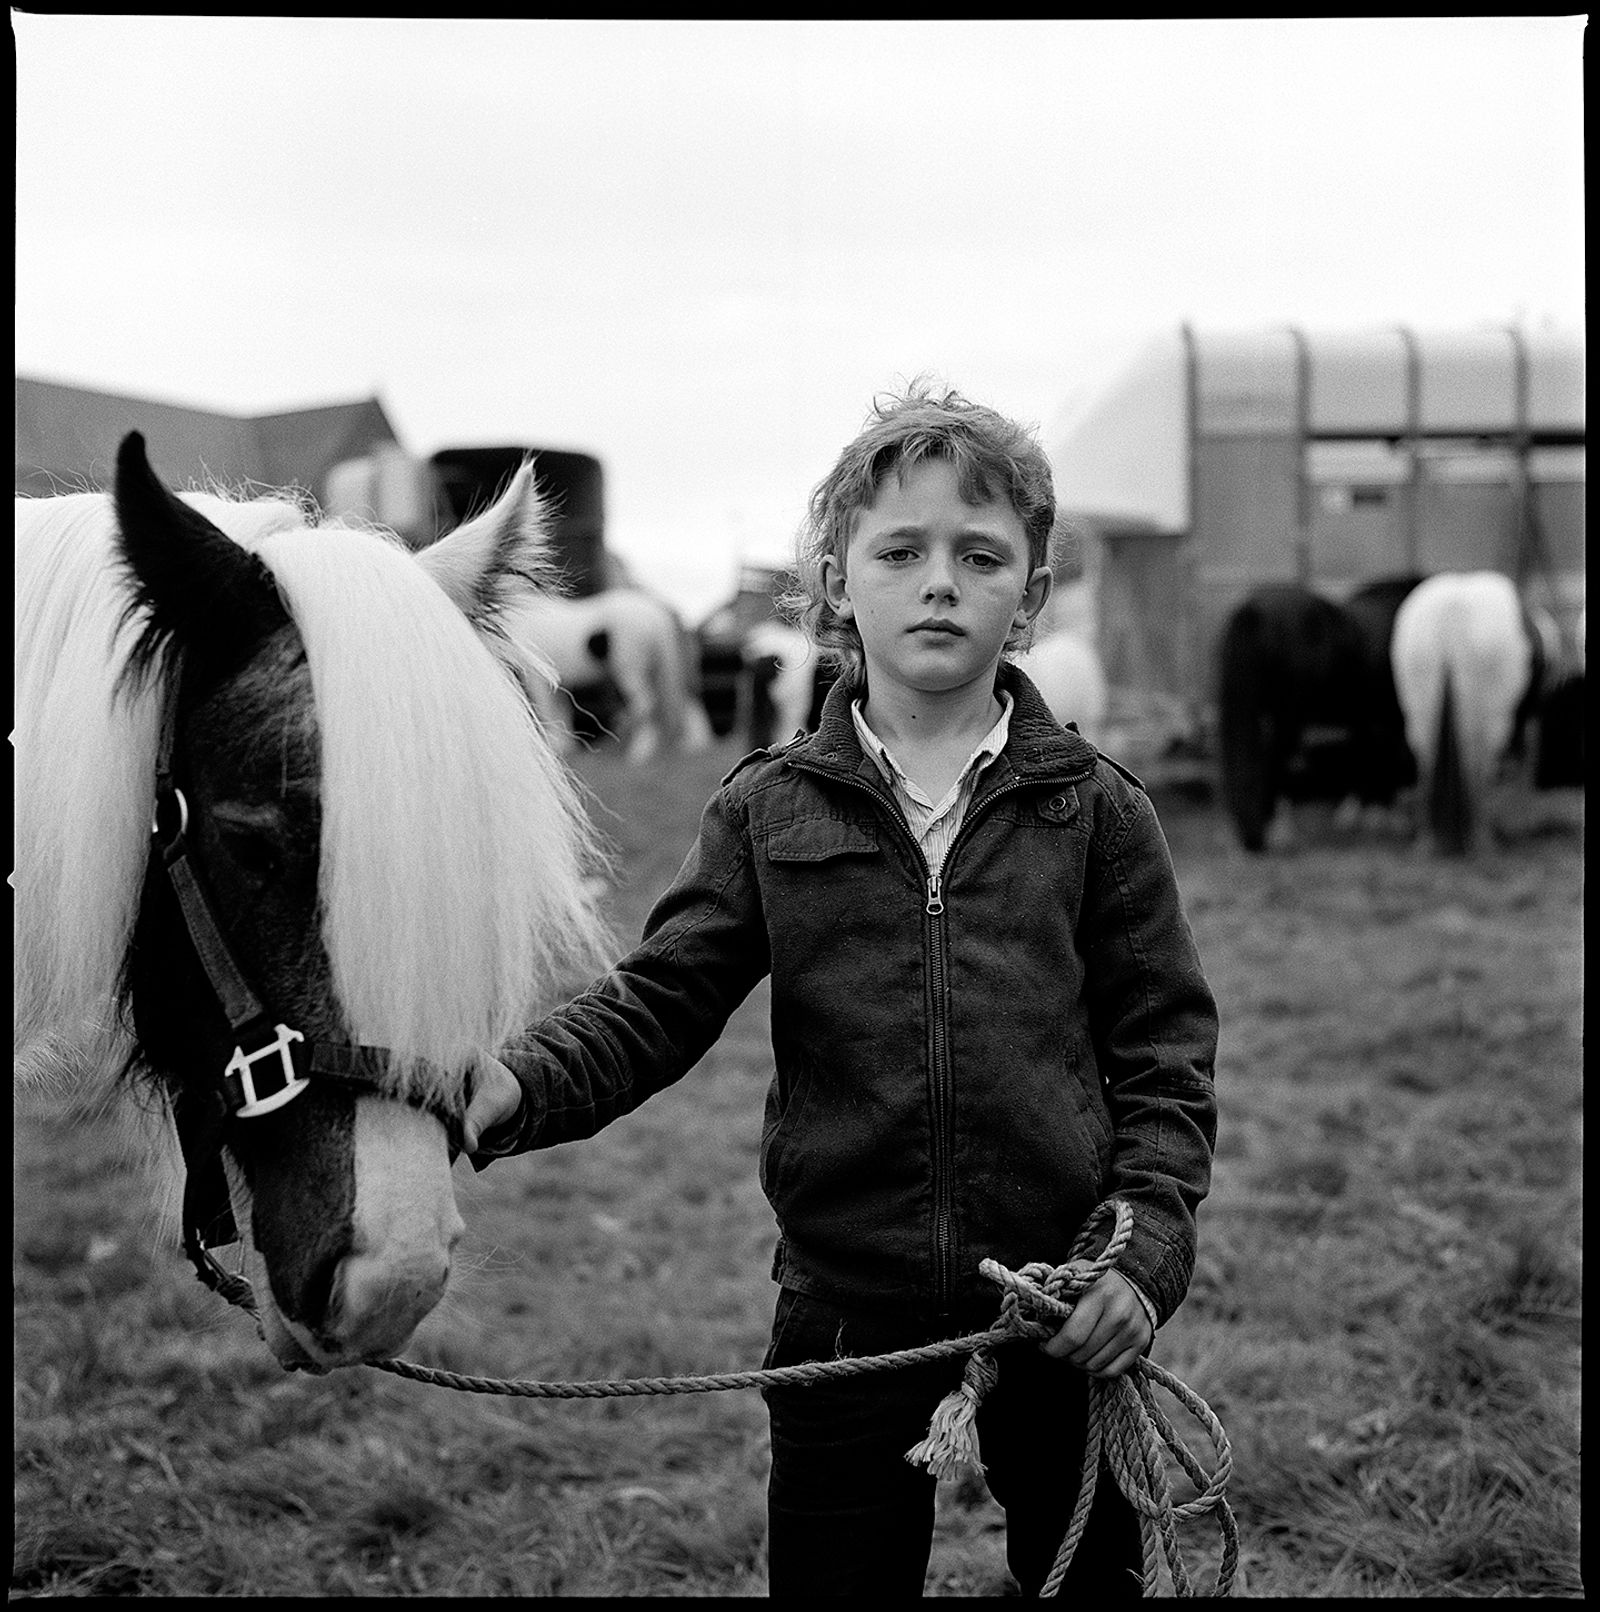 © Joseph-Philippe Bevillard - Mick and His Pony, Ballinasloe, Galway, Ireland 2014